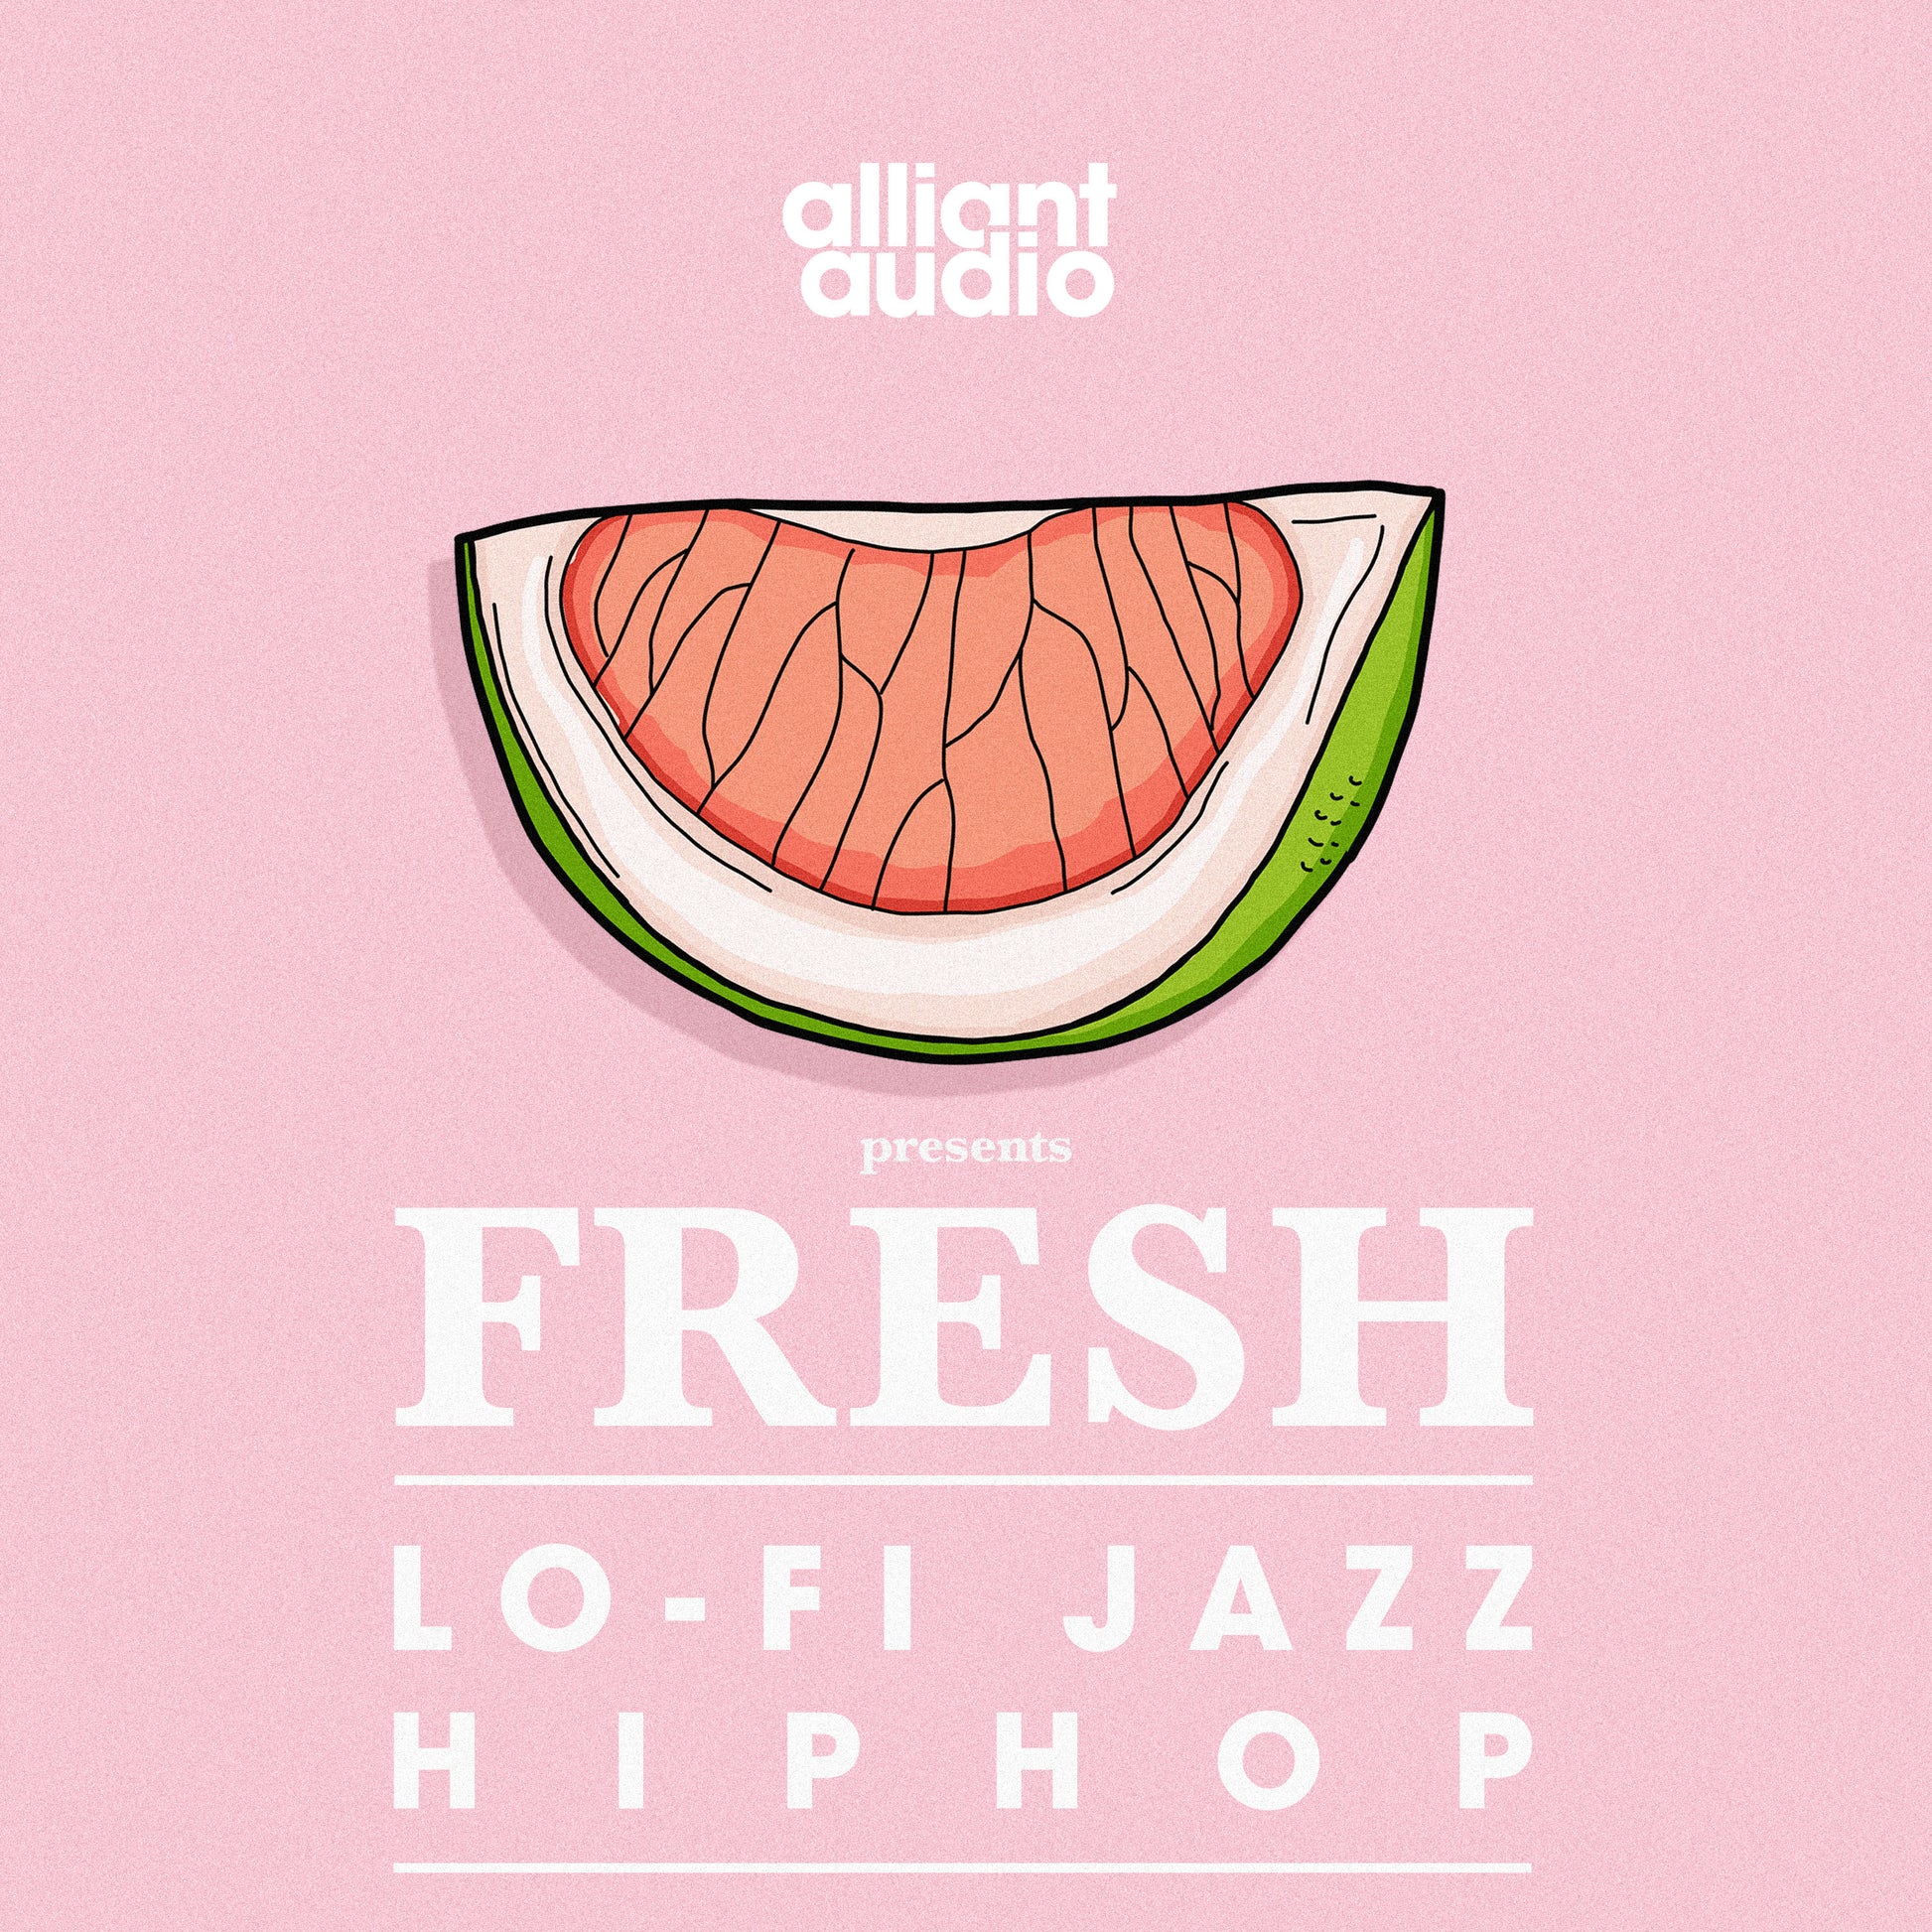 Alliant Audio Fresh Lofi Jazz Hip Hop Sample Pack, Cover